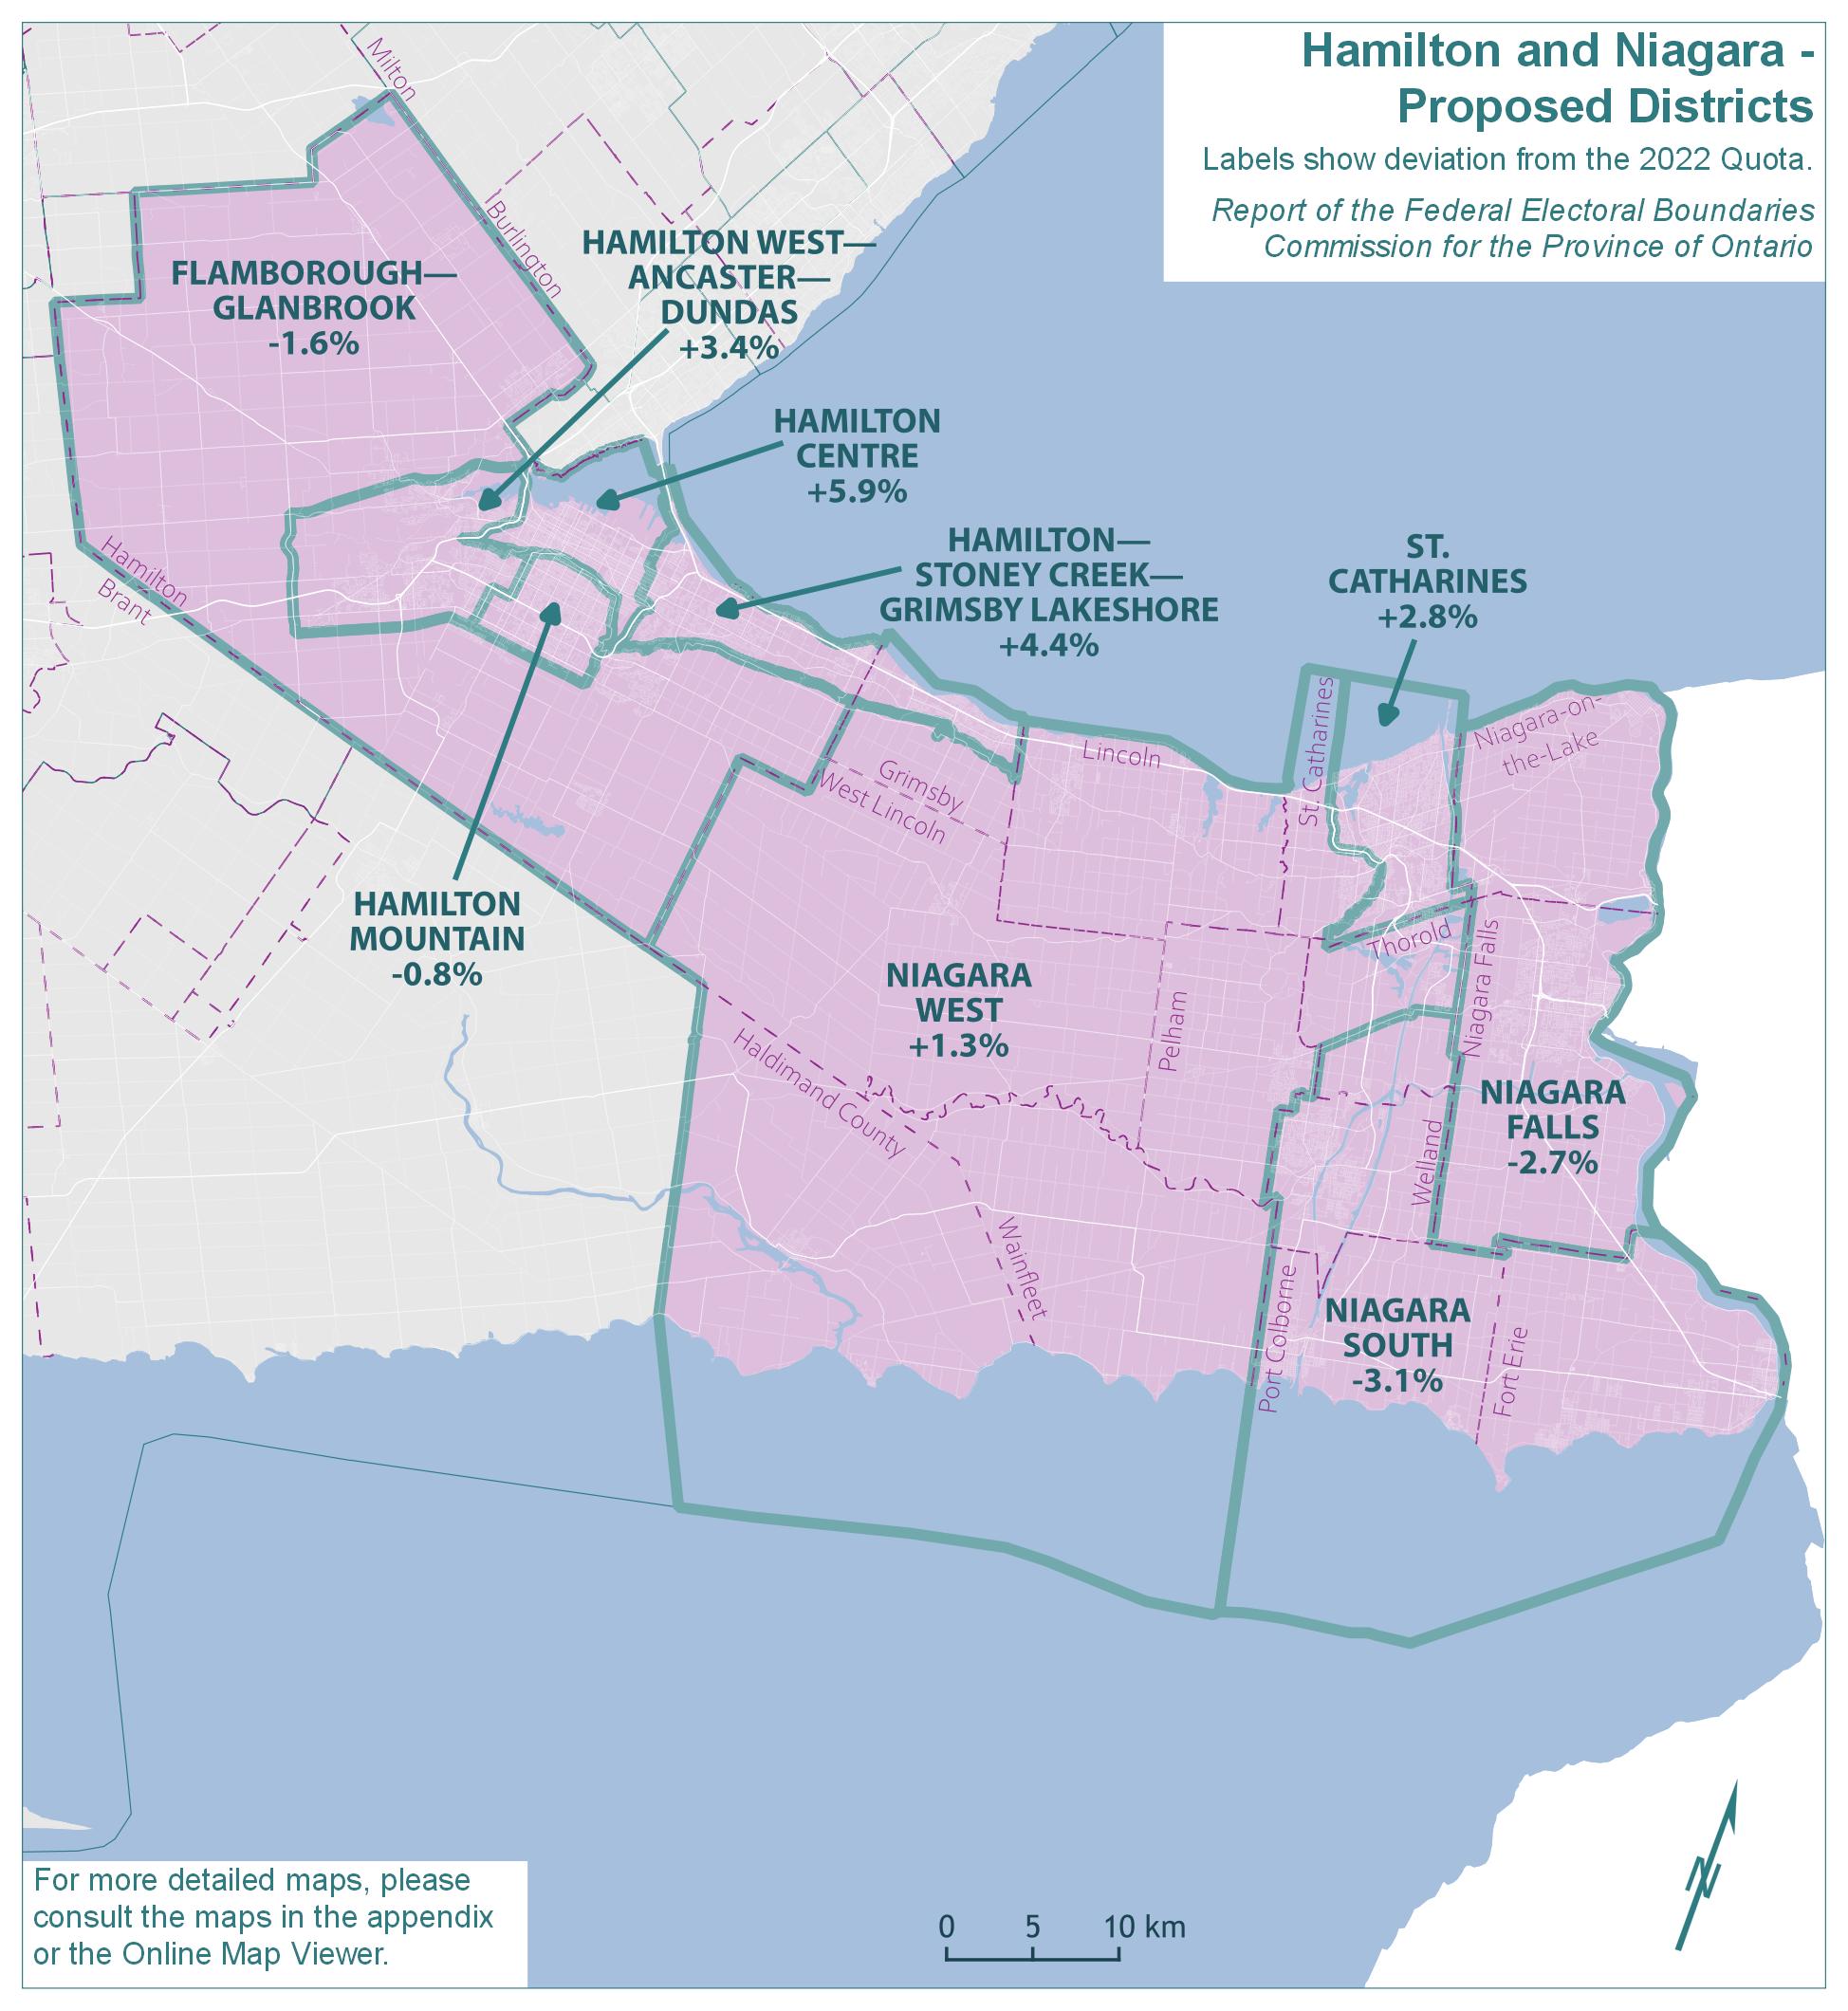 Hamilton and Niagara - Proposed Districts